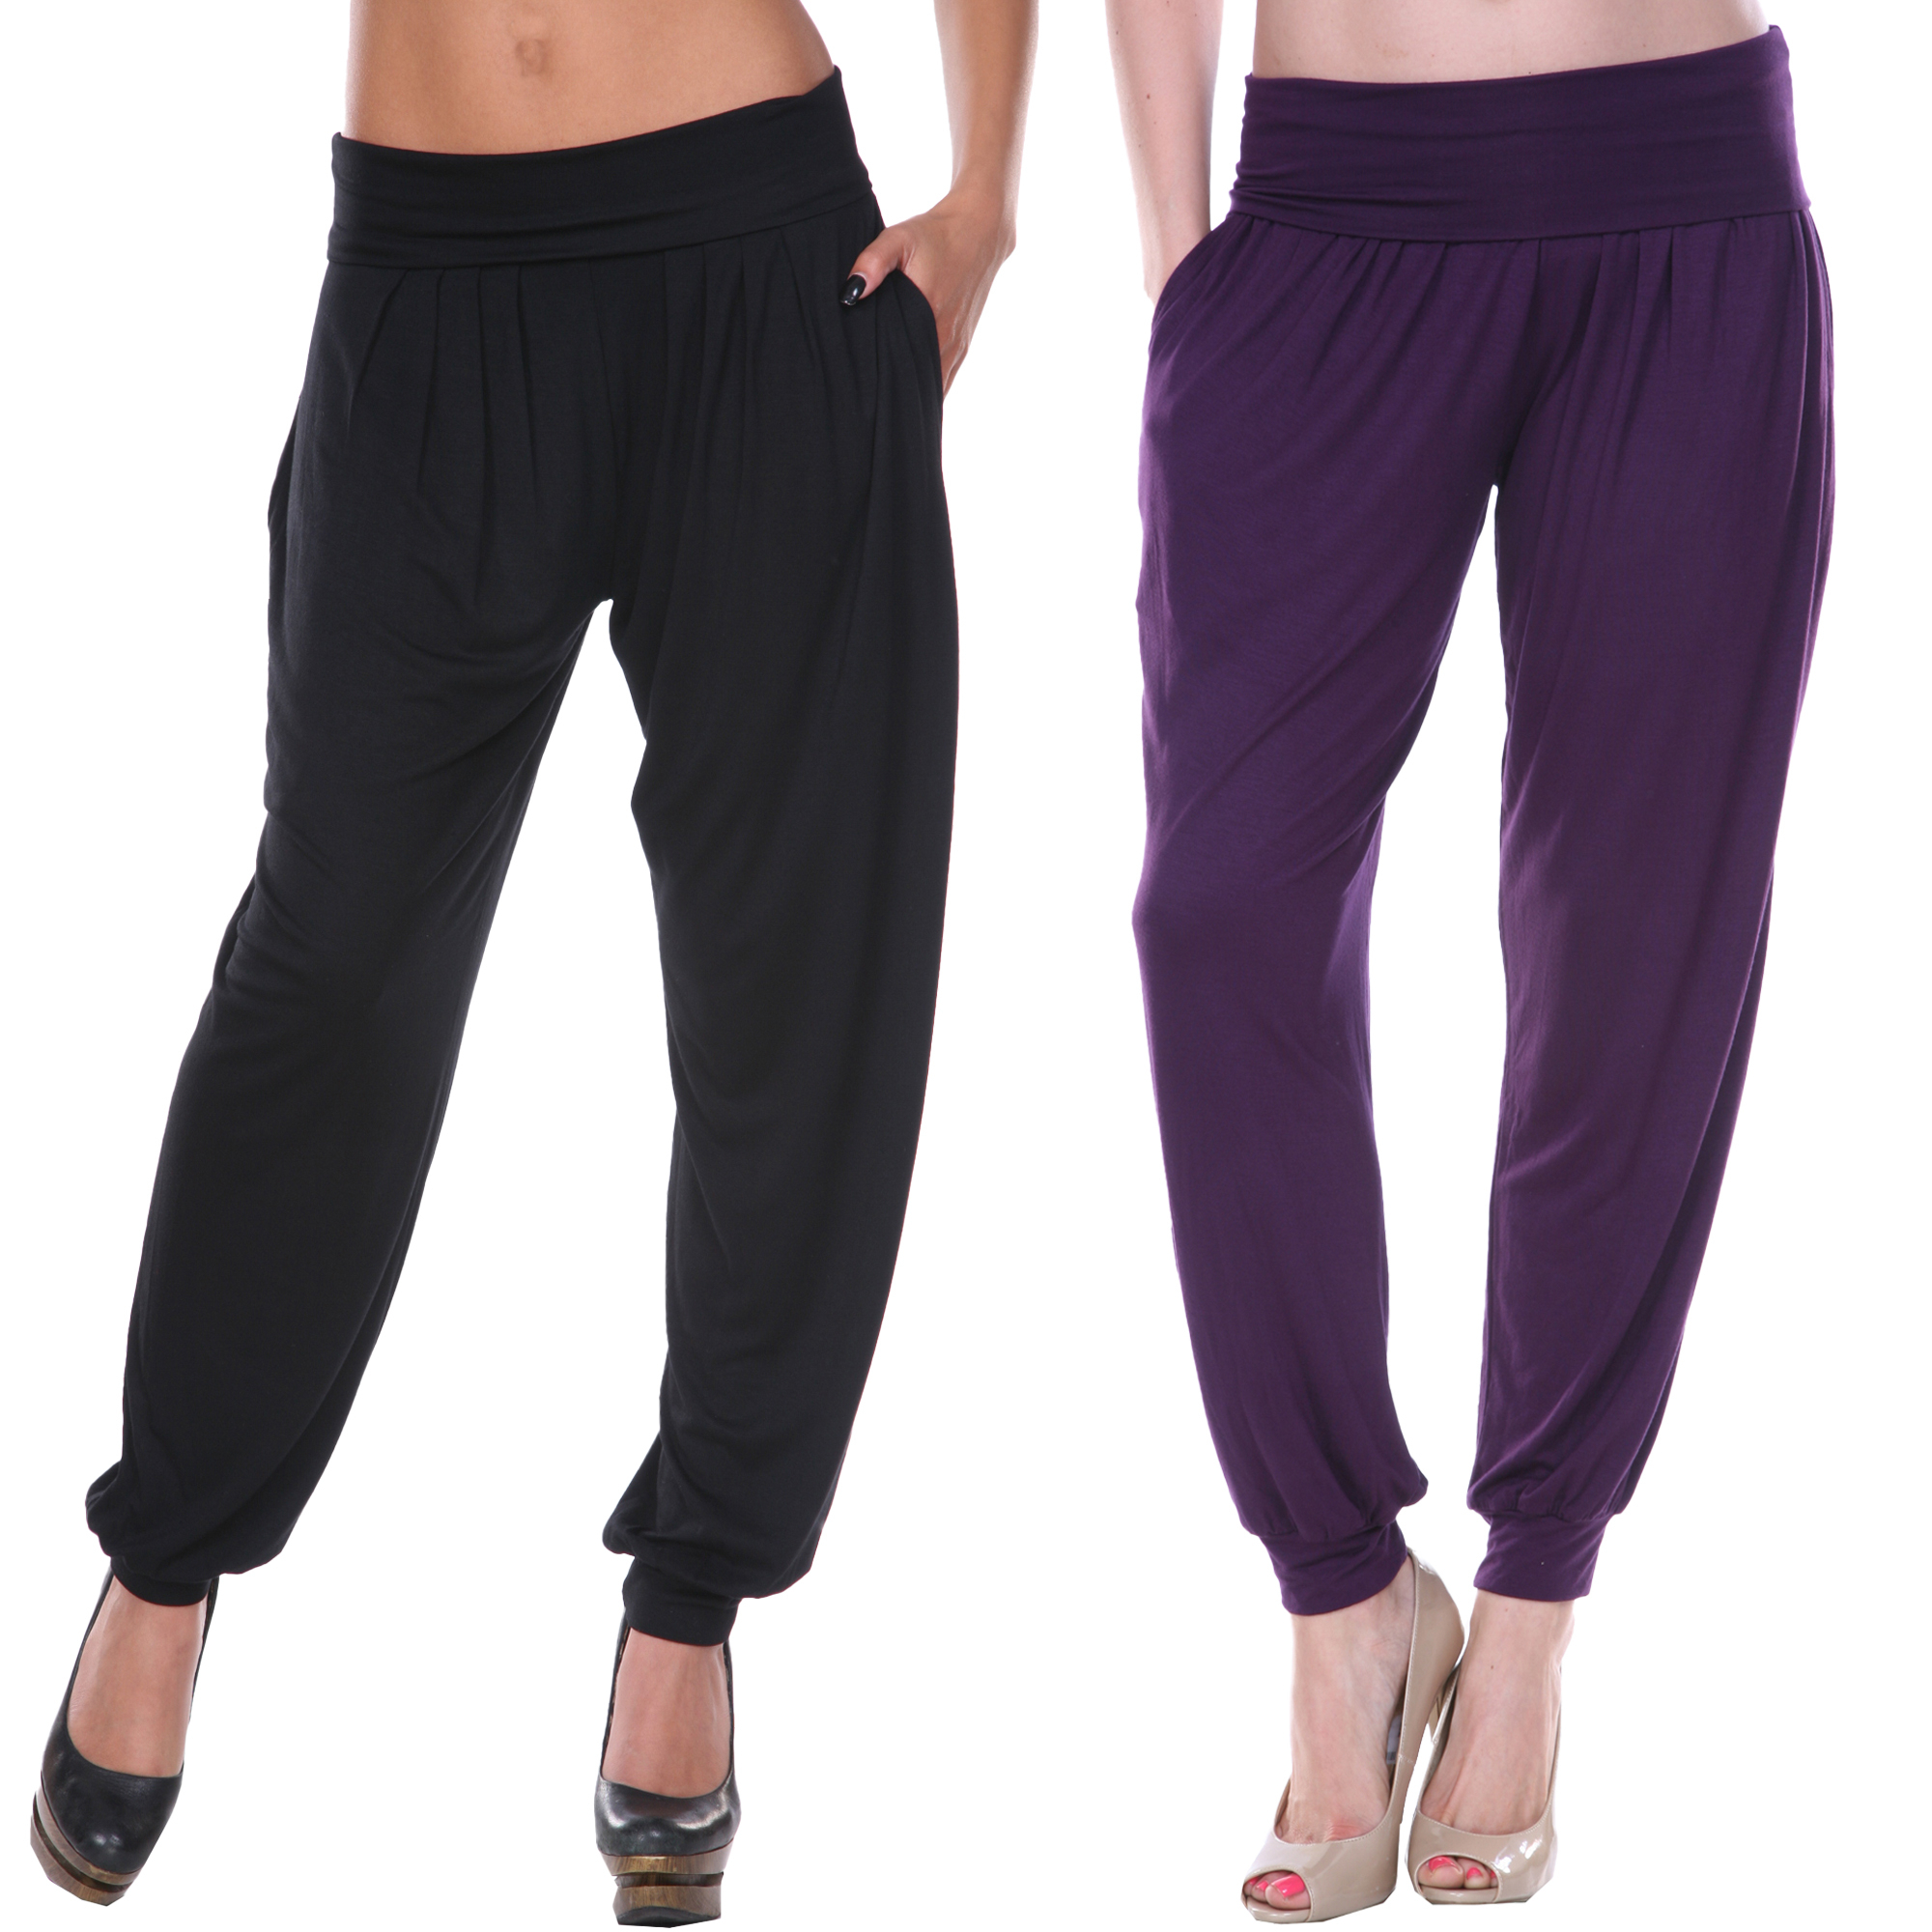 White Mark Women's 2-Pack High Waist Harem Pants - Black, Purple, Small